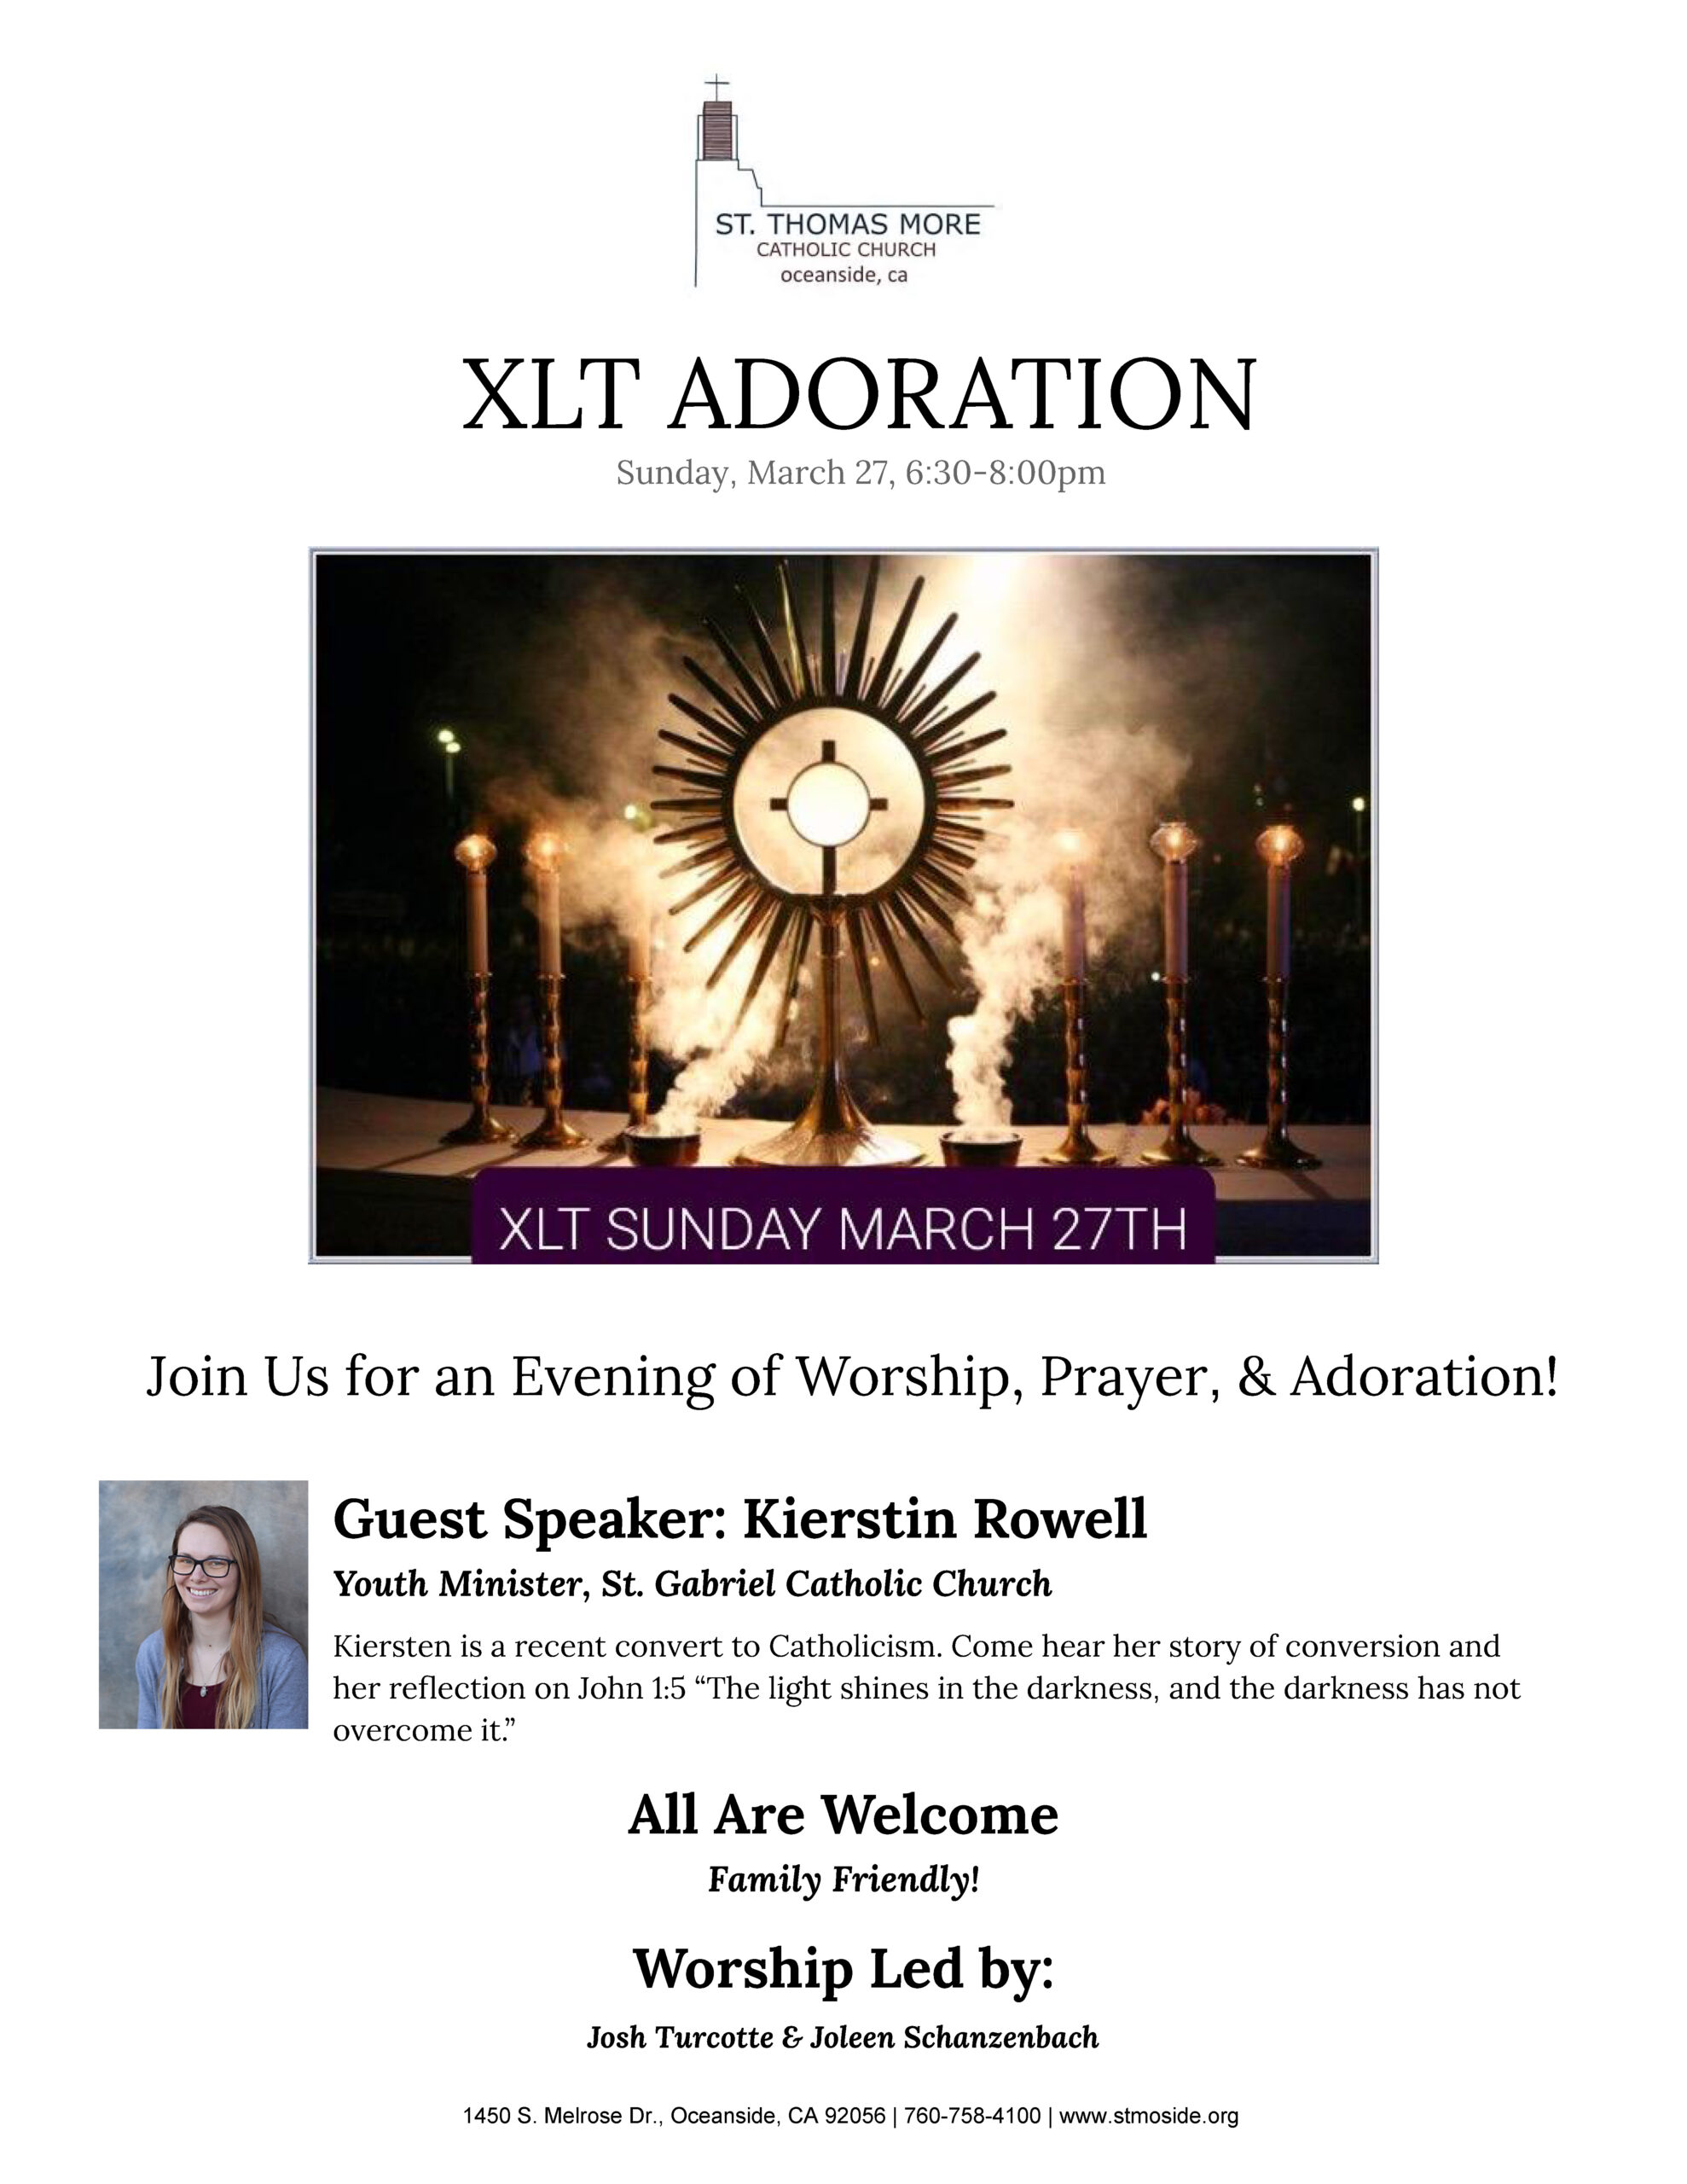 XLT Evening of Worship, Prayer, & Adoration - Sunday, March 27, 6:30pm